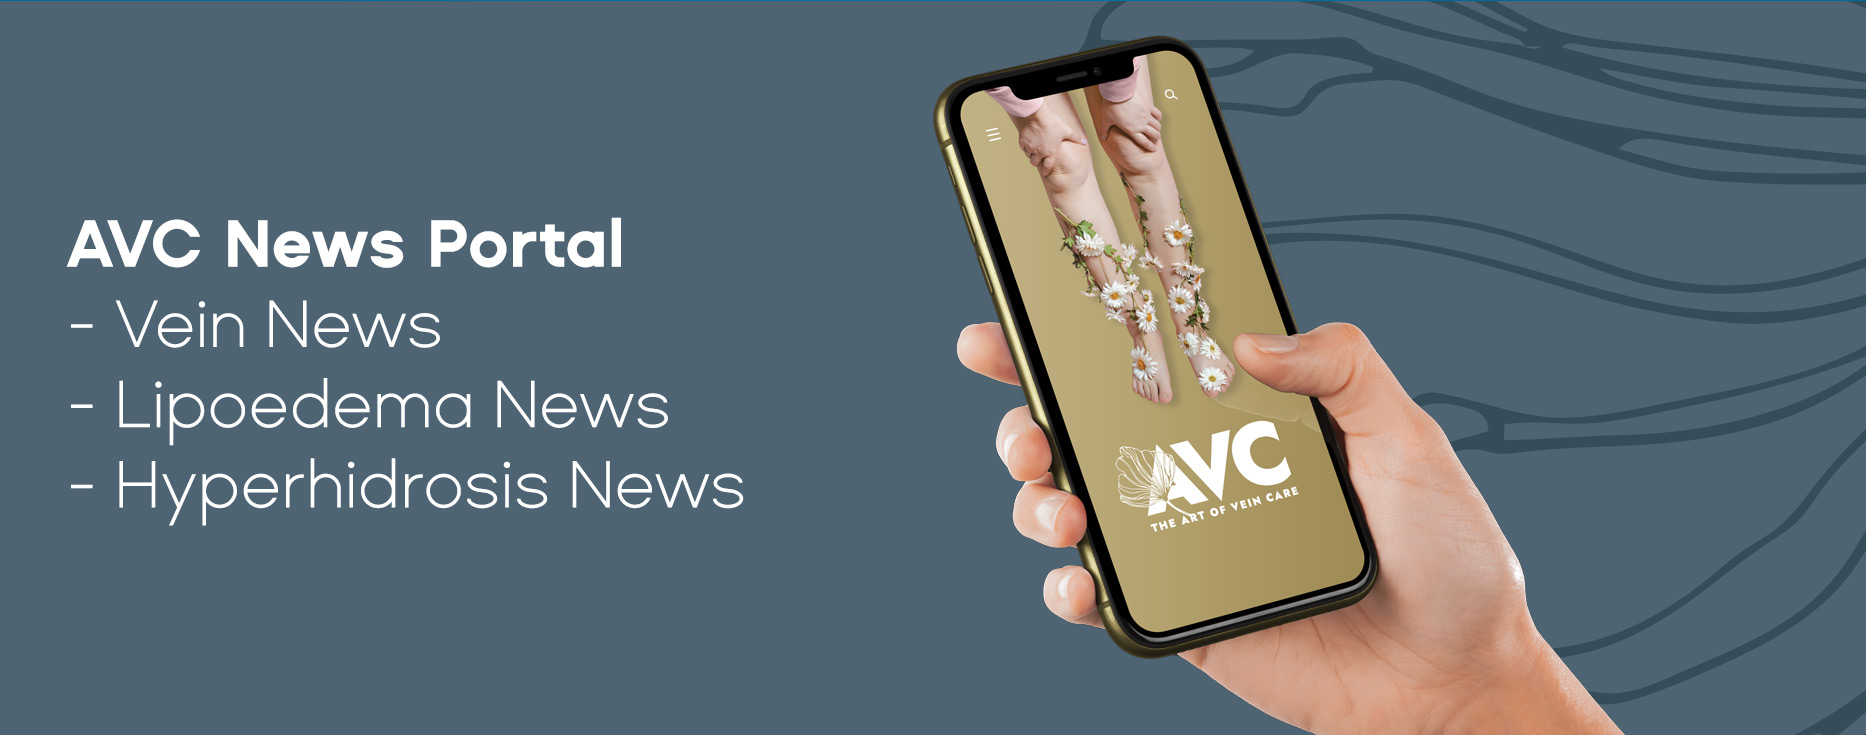 AVC News Portal